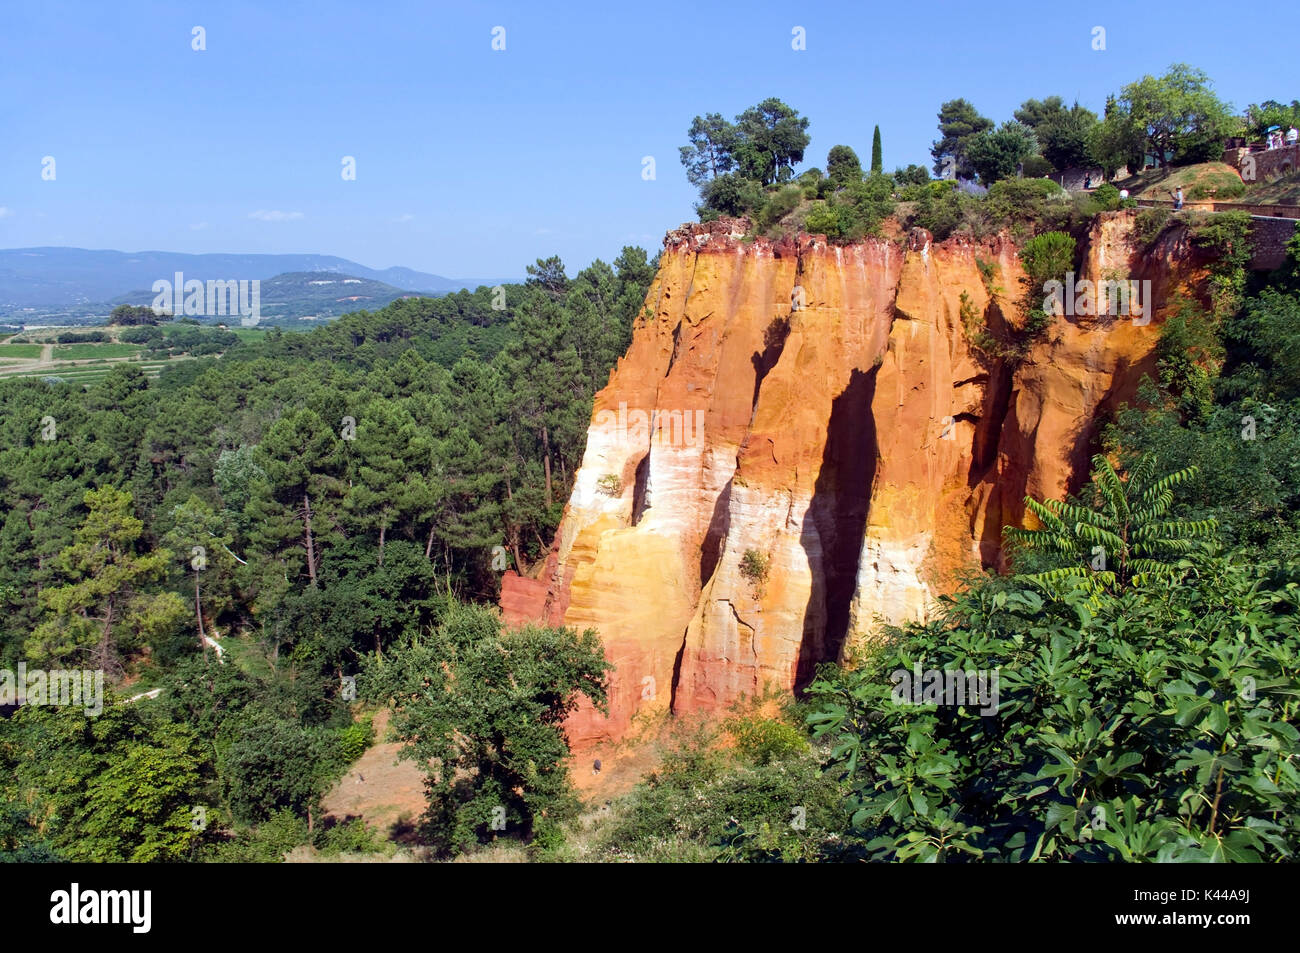 Europe, France, Luberon region, Roussillon district. Ochre deposits. Stock Photo